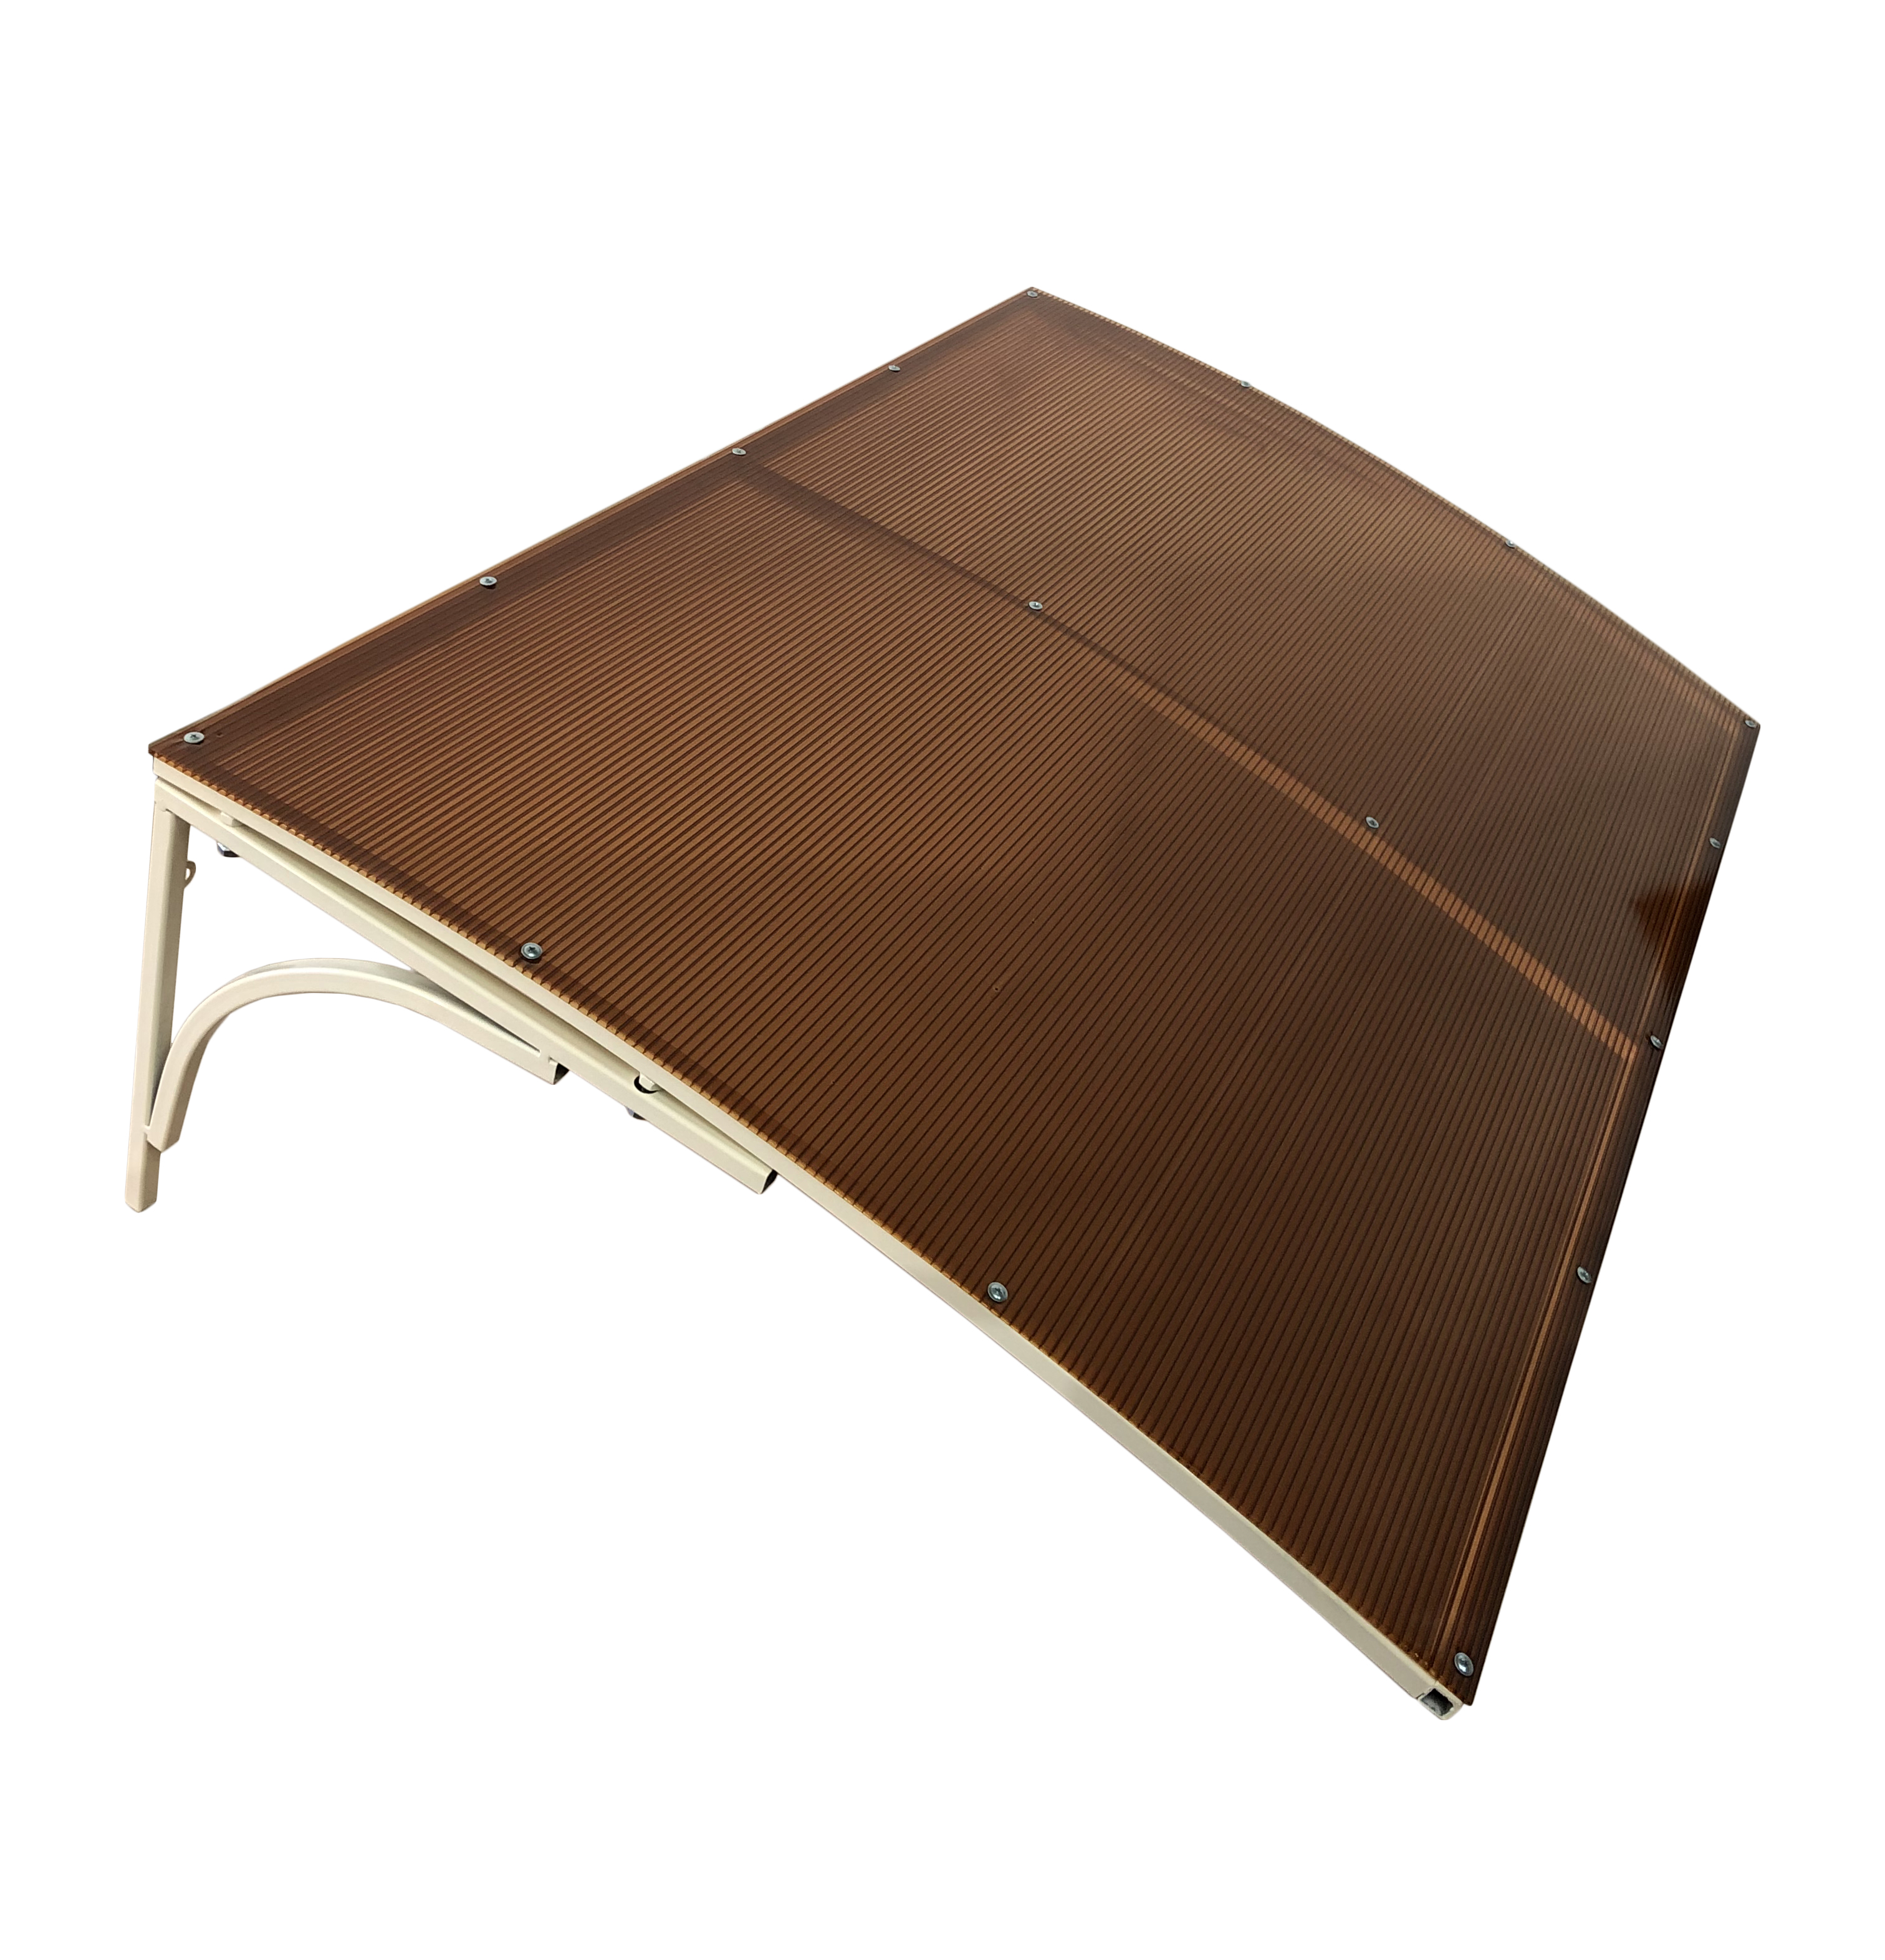 стул для столовых кафе дома sht s75 серебристый металлический каркас пластик белый Козырек над входной дверью ArtCore, YS71 бежевый каркас, коричневый поликарбонат